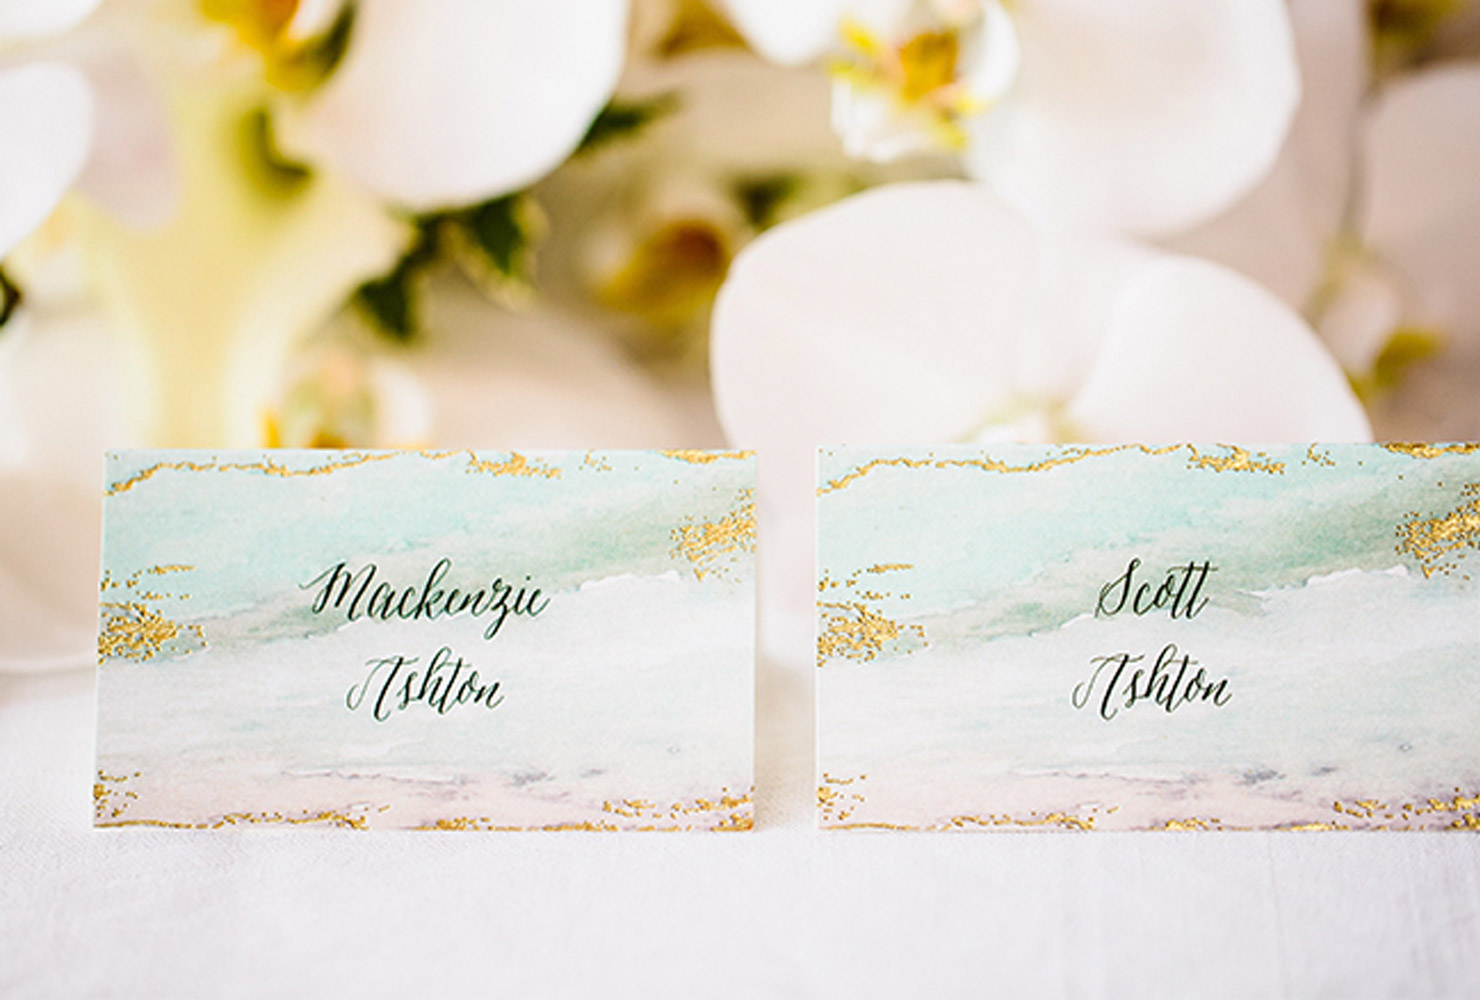 wedding place card ideas golden pastels